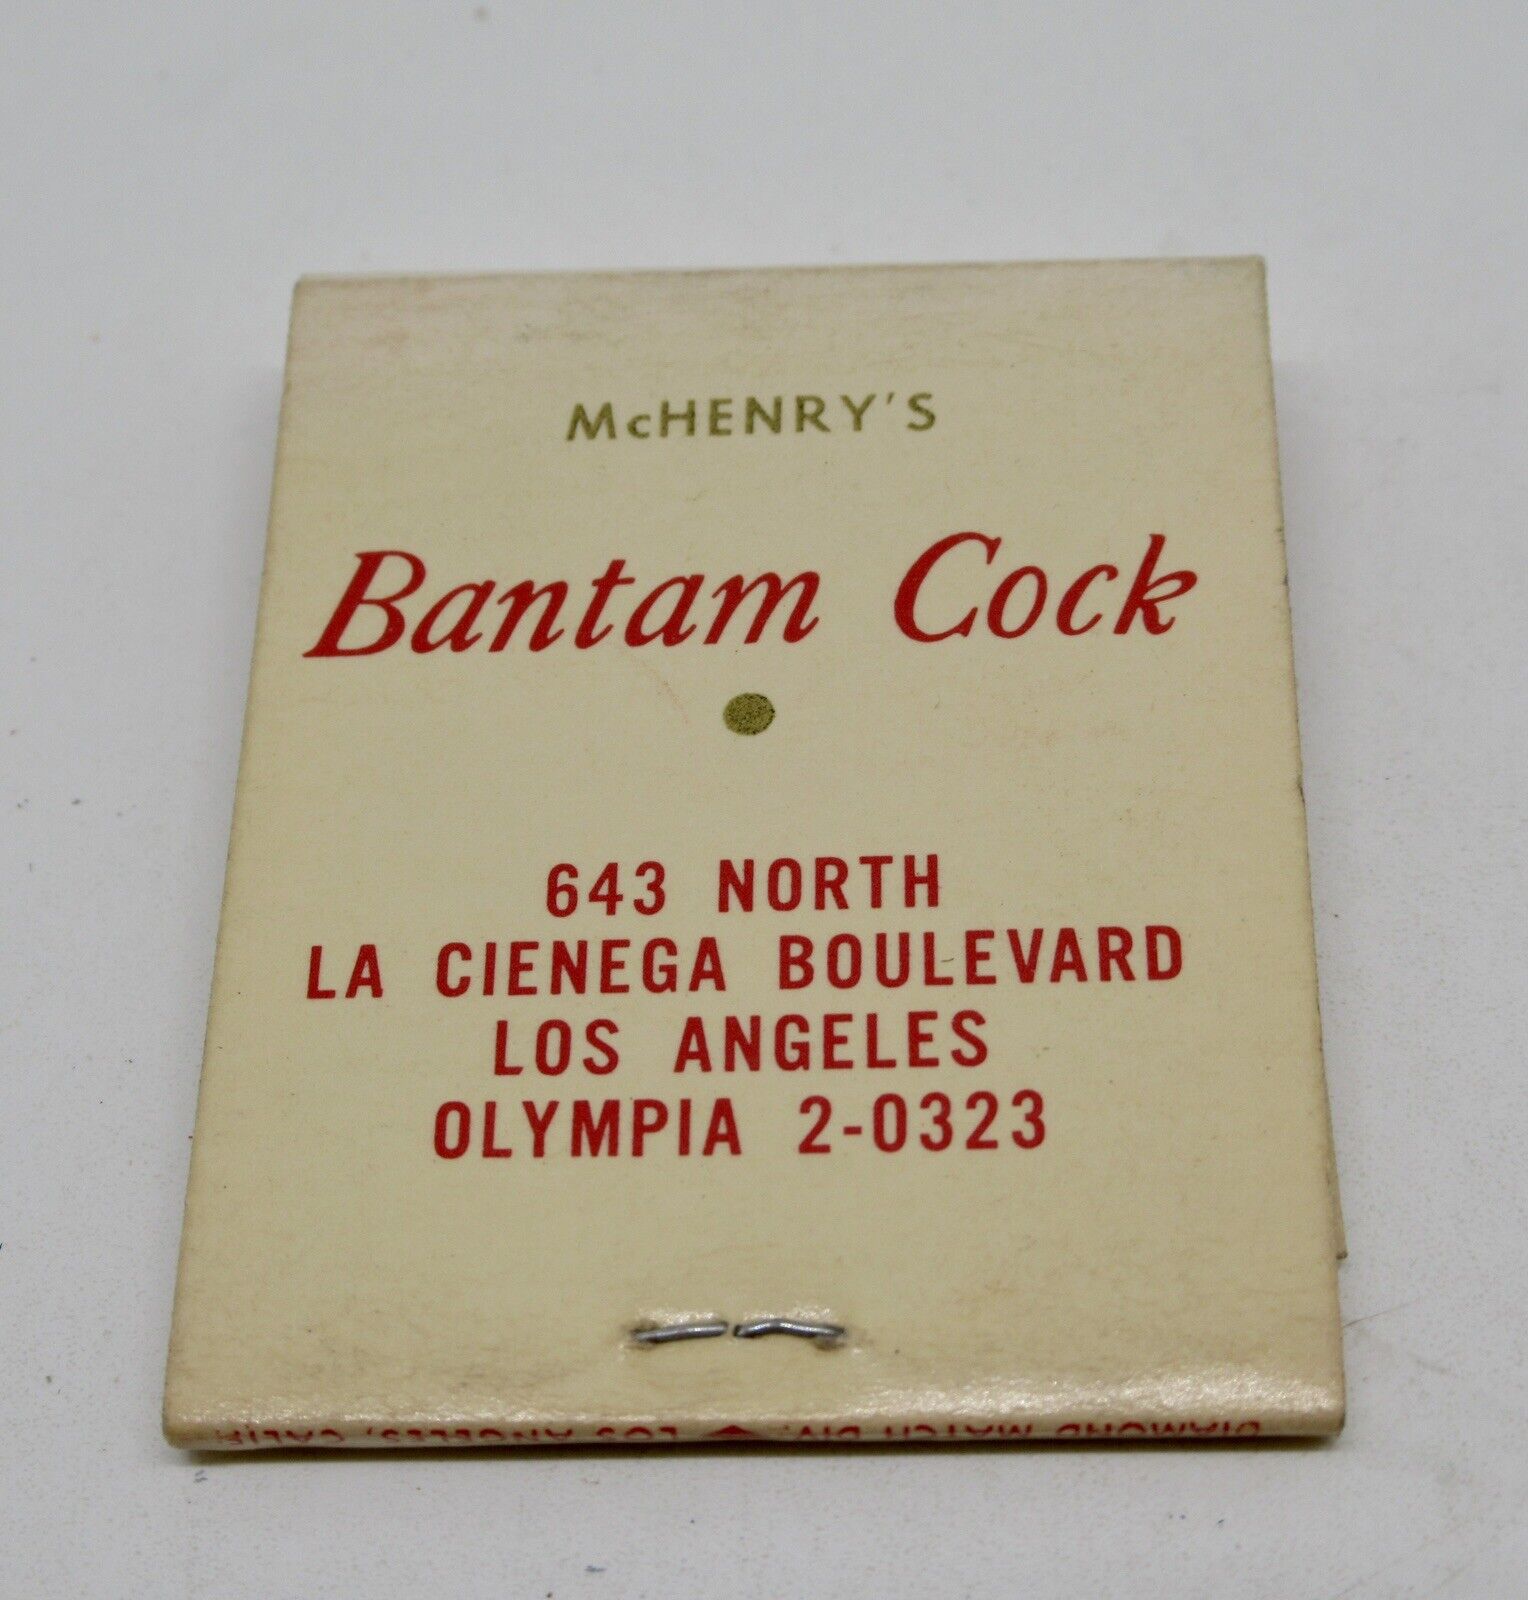 Bantam Cock Restaurant La Cienega Blvd Los Angeles California FULL Matchbook